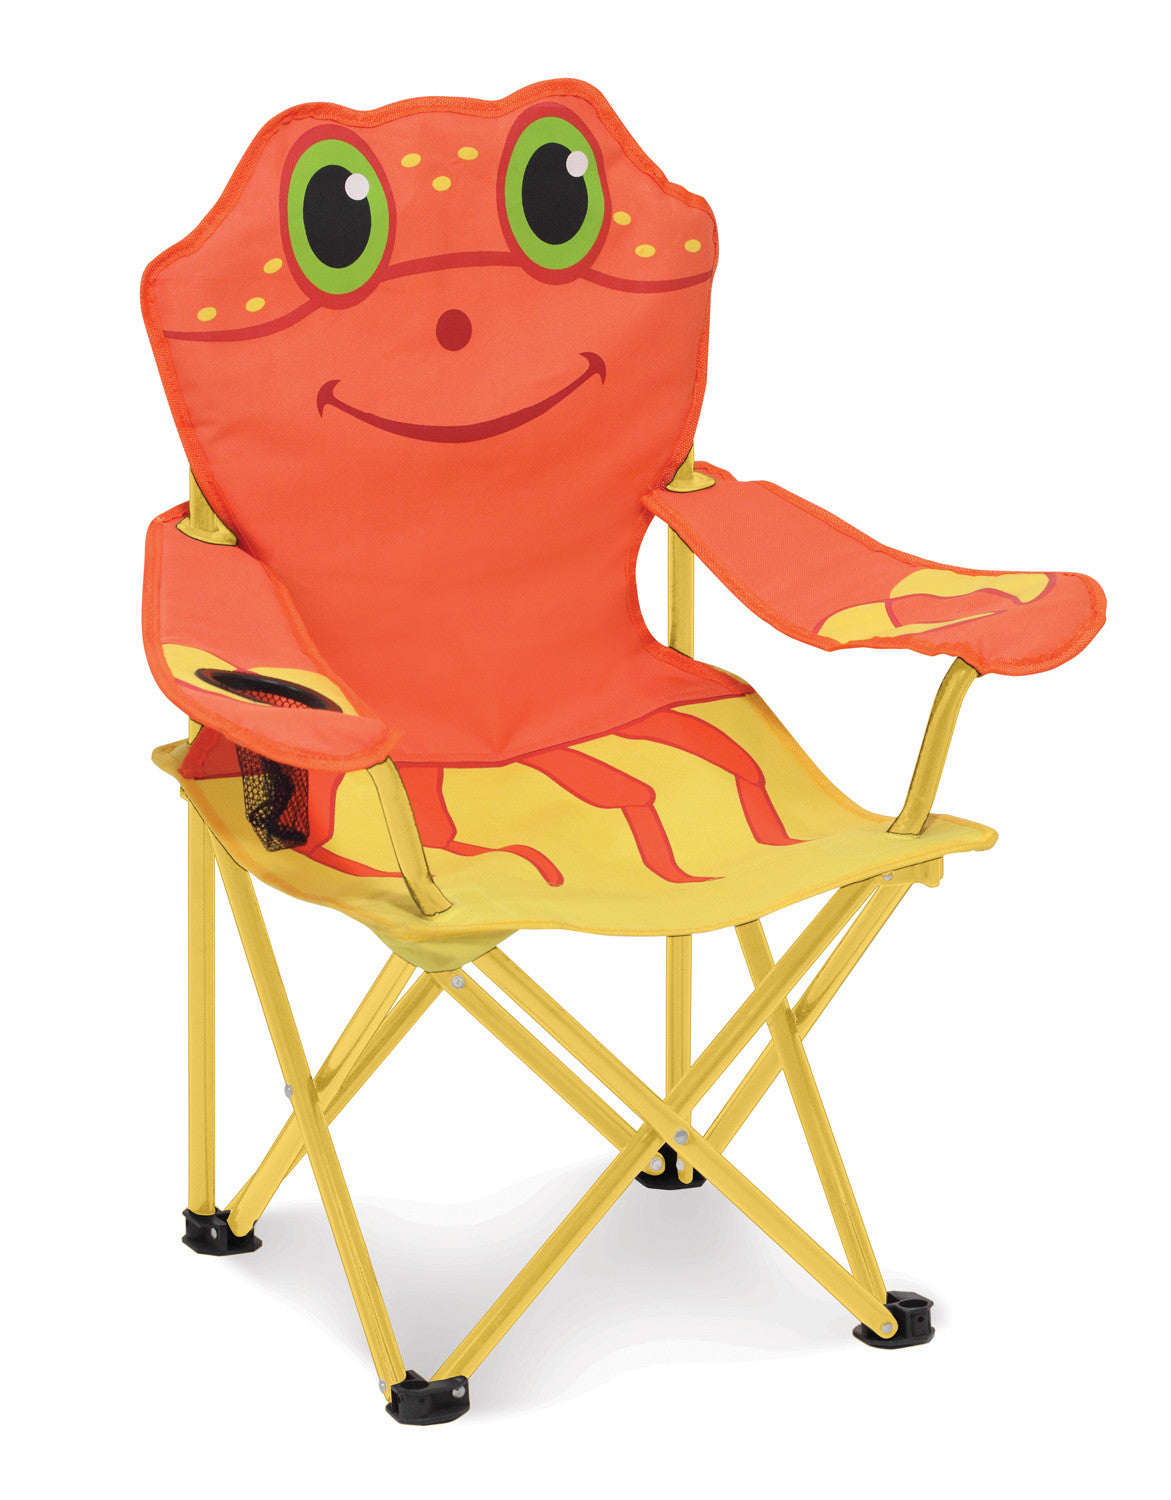 Melissa & Doug Clicker Crab Chair 6417